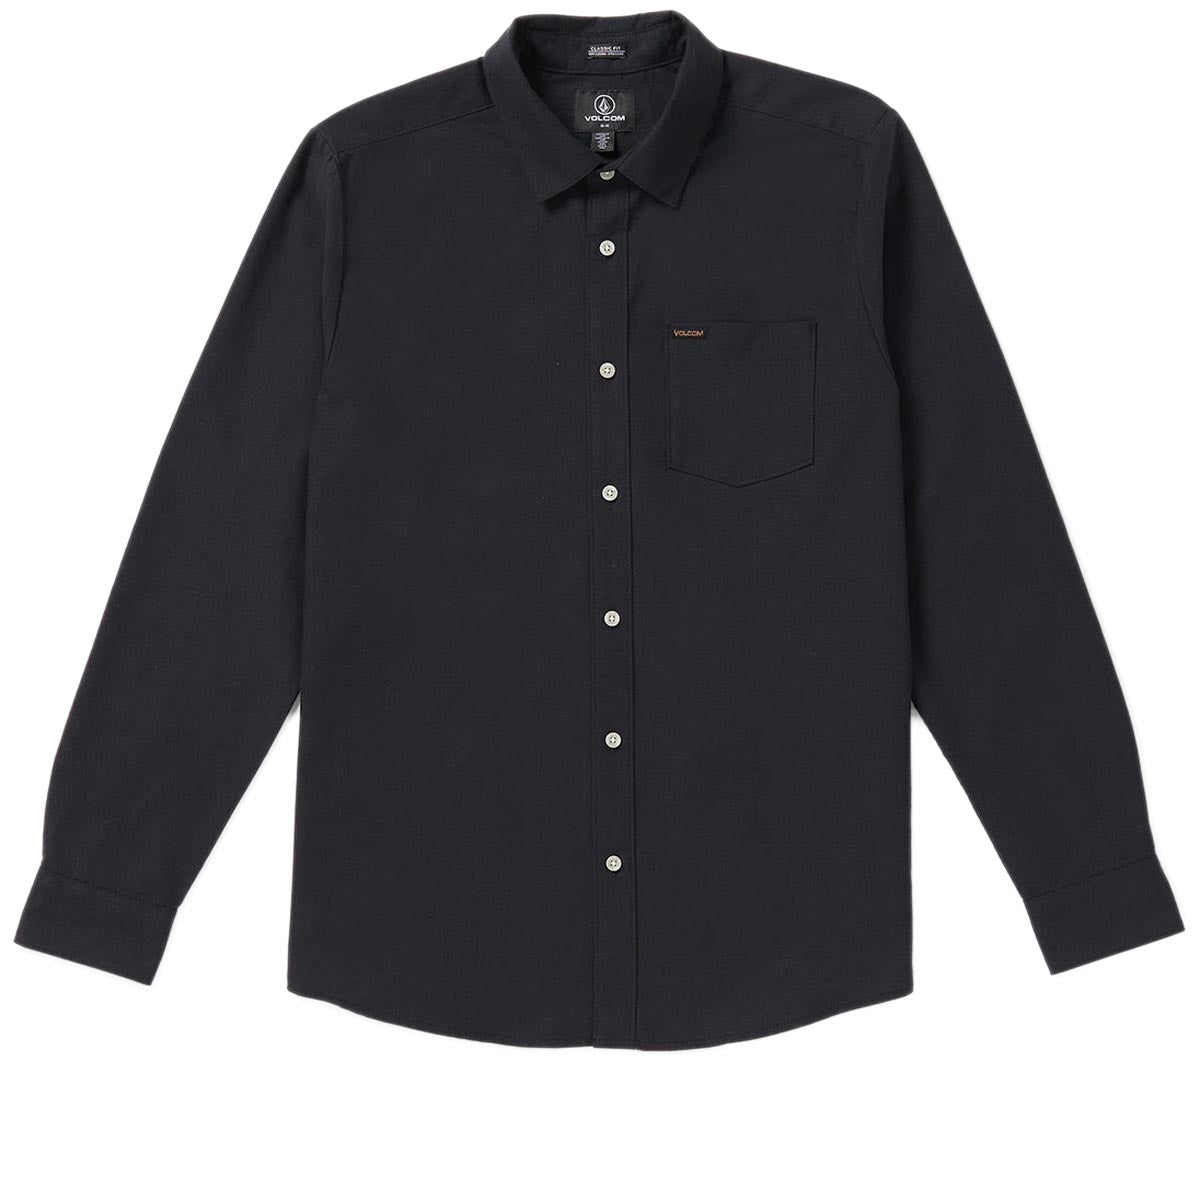 Volcom Veeco Oxford Long Sleeve Shirt - Black image 1